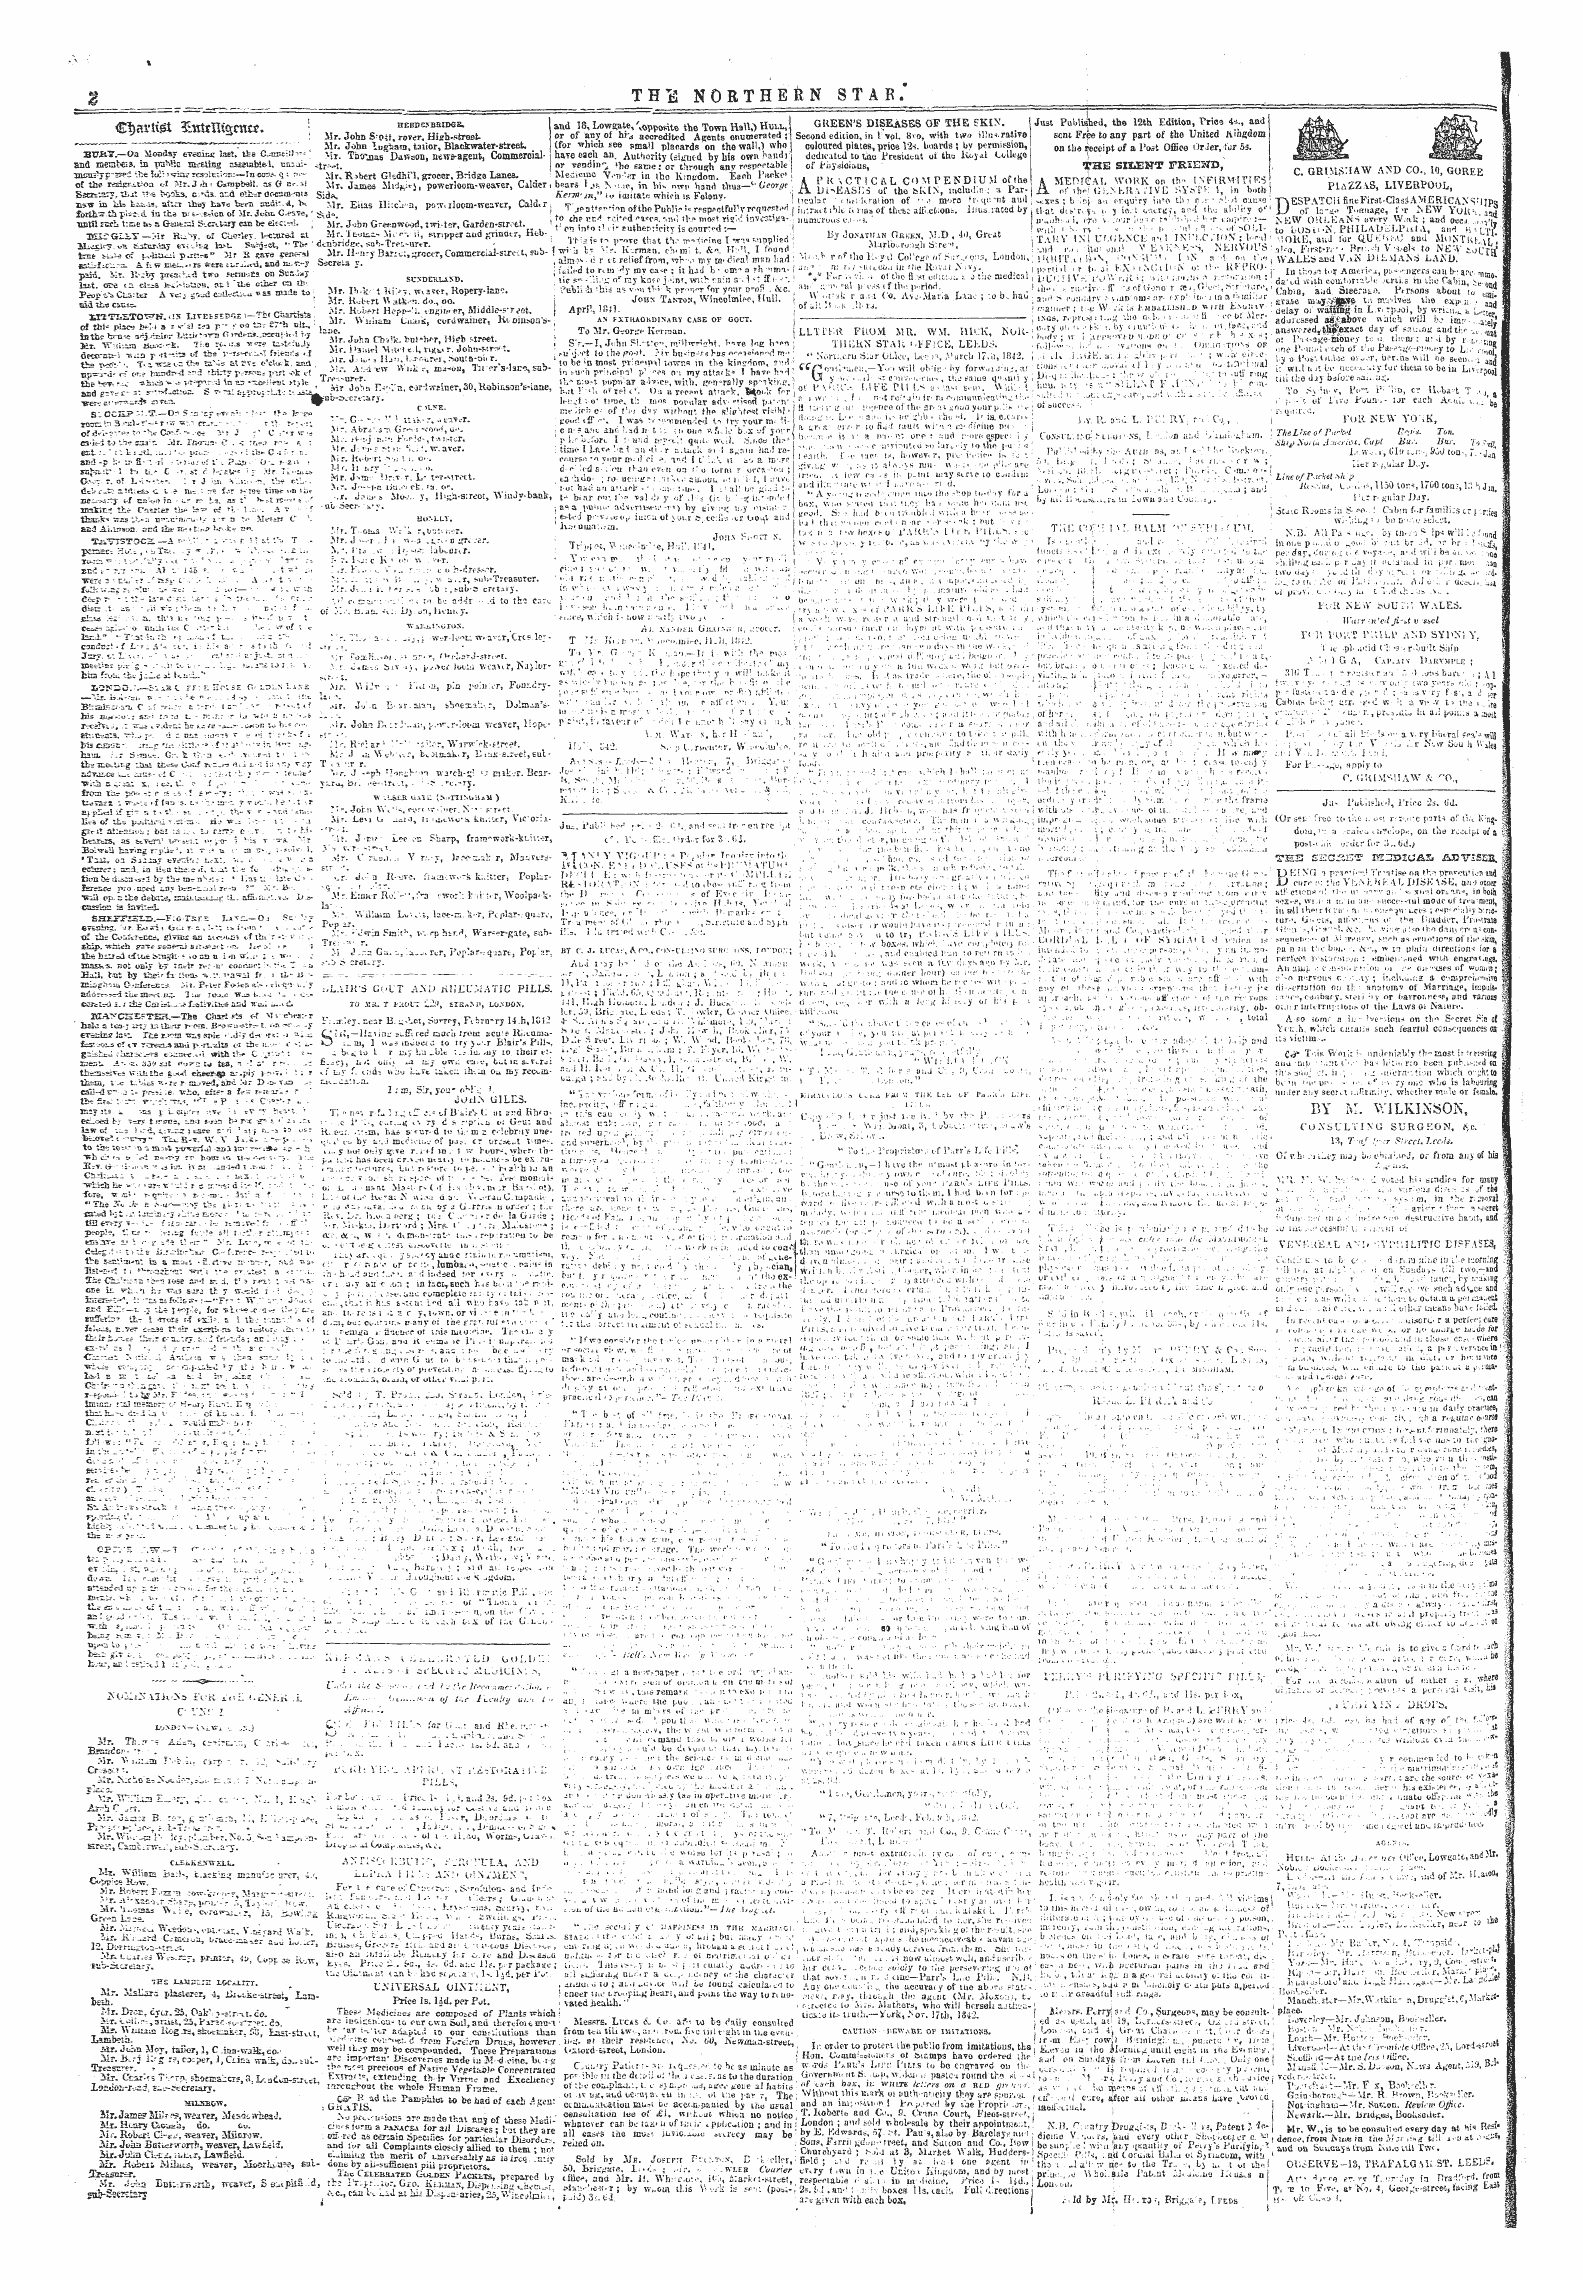 Northern Star (1837-1852): jS F Y, 5th edition - Ad00216